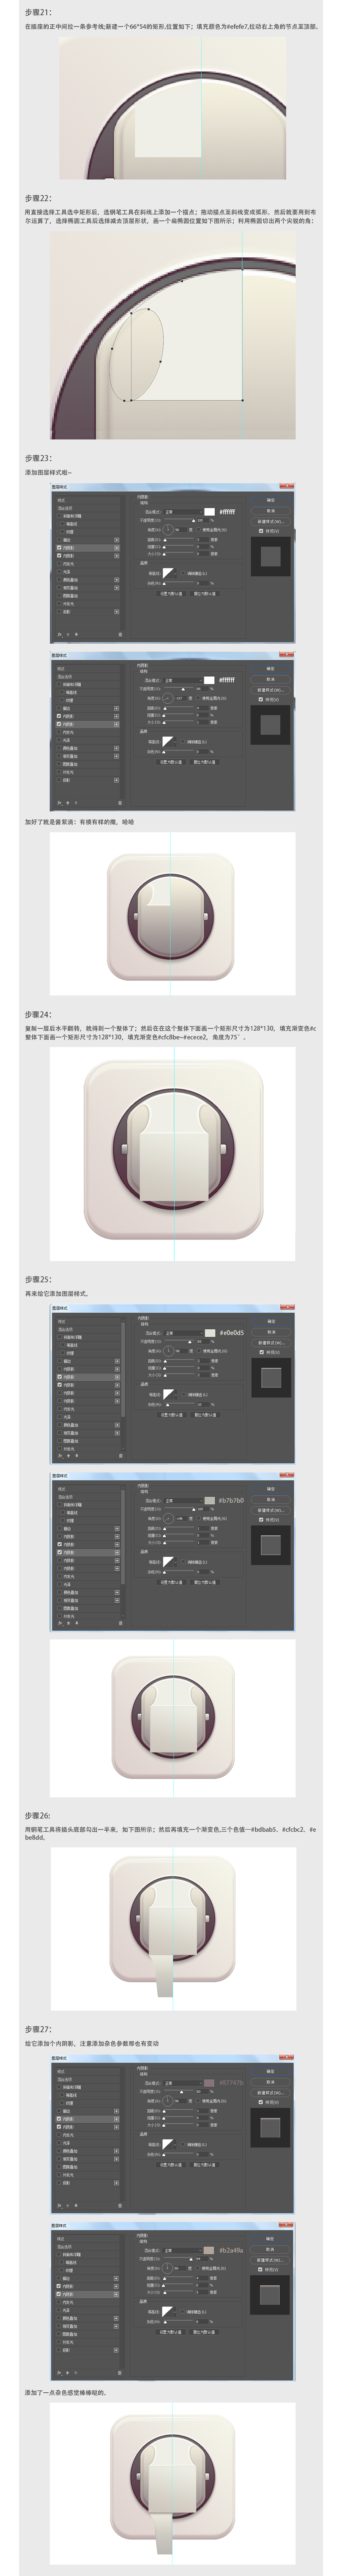 Photoshop设计立体风格的插头APP图标,PS教程,素材中国网